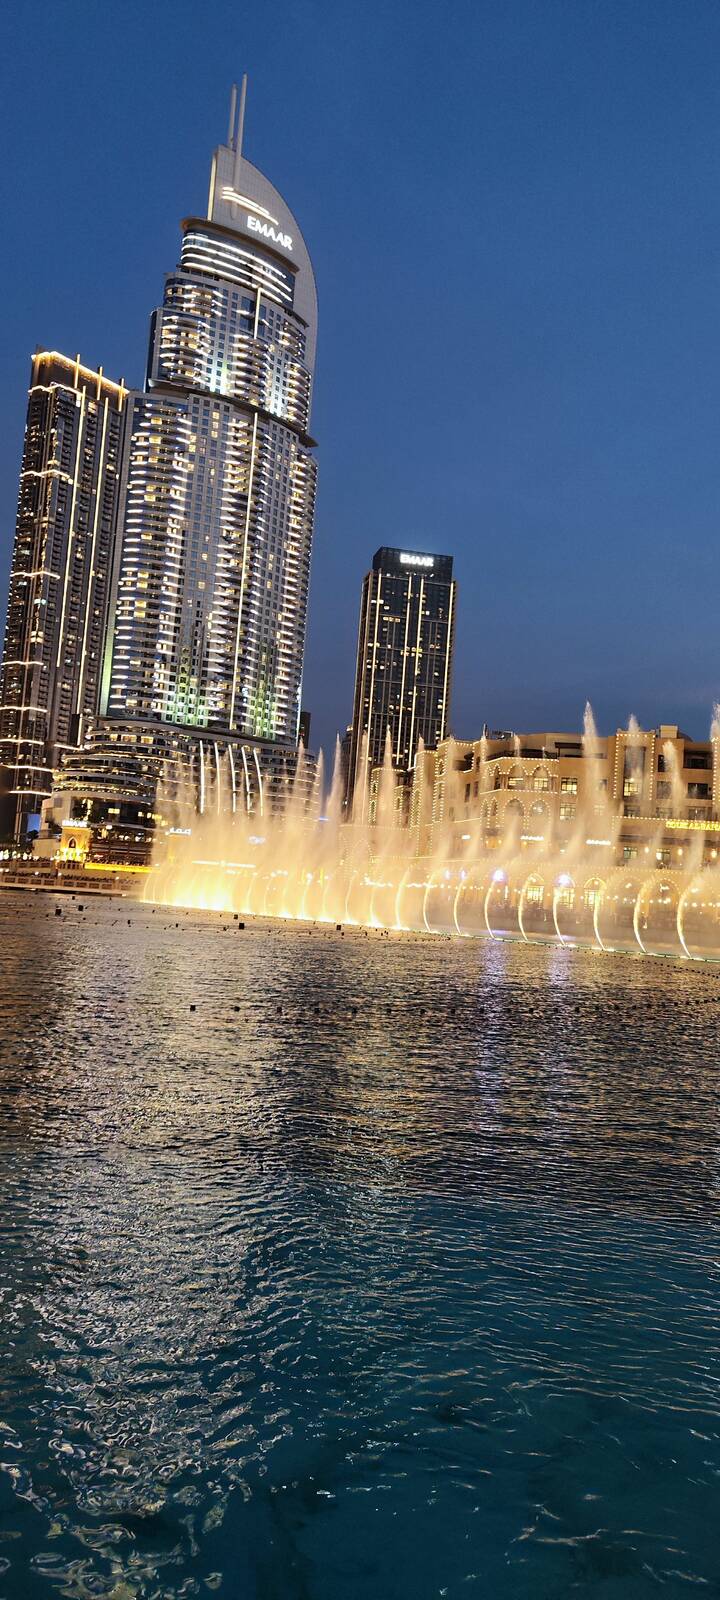 Image of Dubai Fountain by Mrugaben Dave